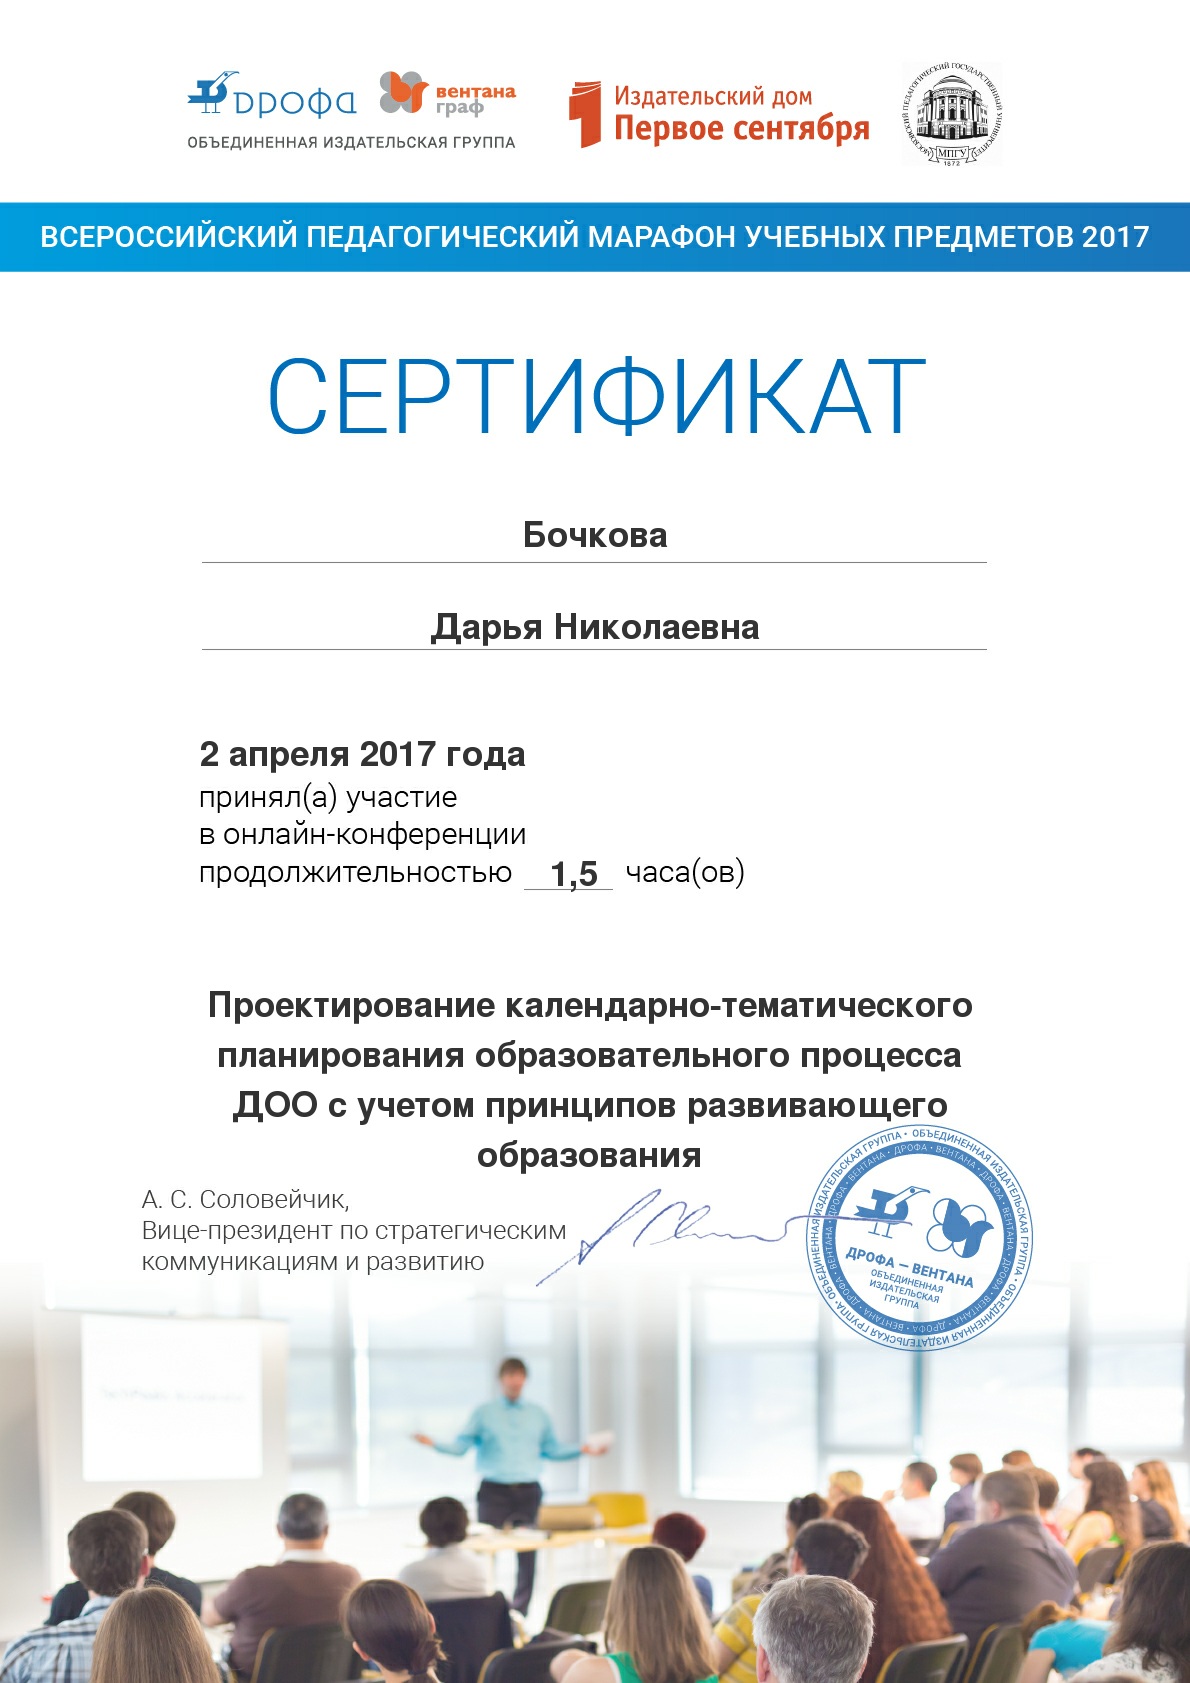 Сертификат онлайн конференции